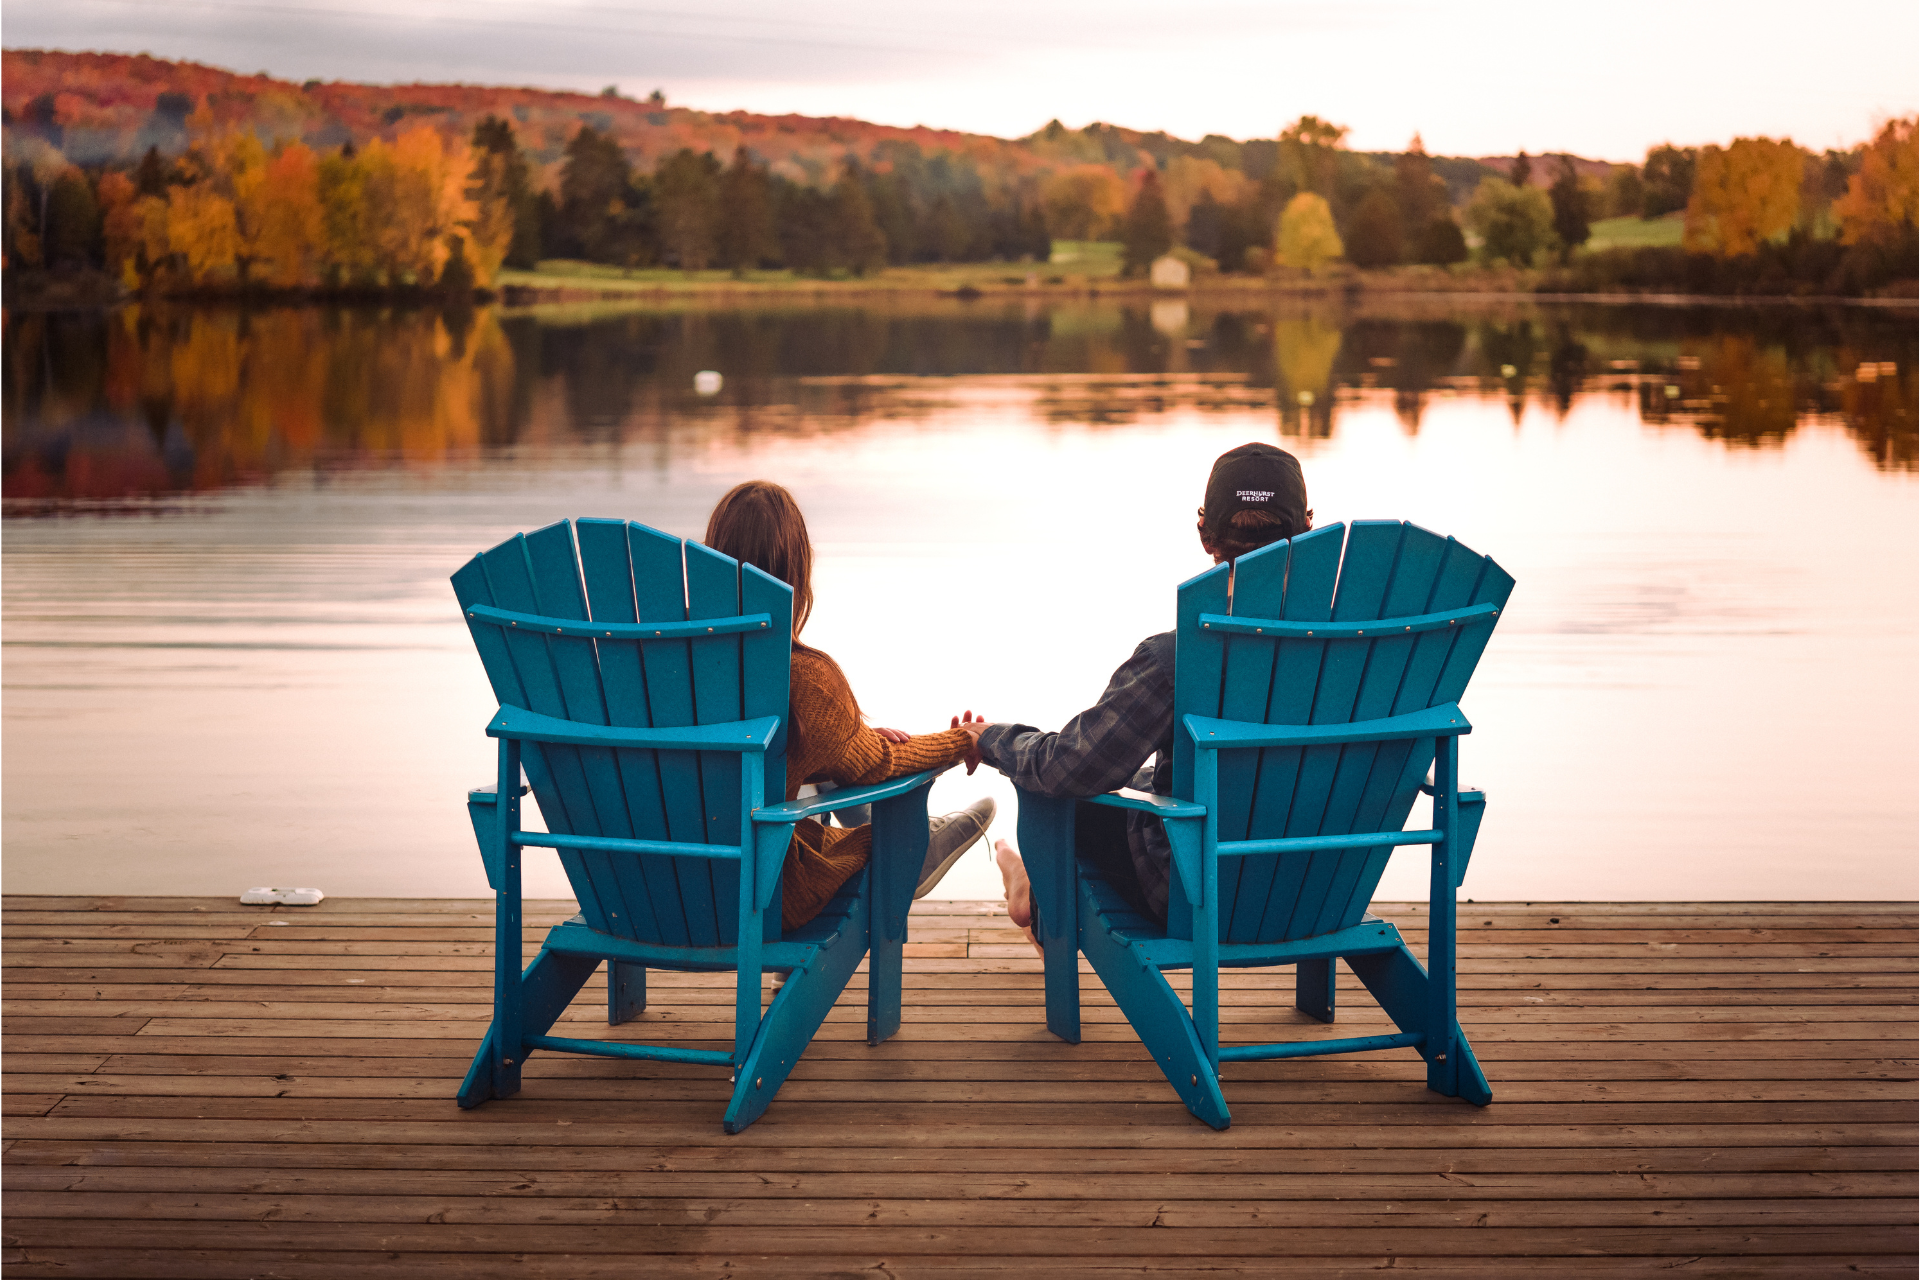 Muskoka chairs on a dock facing the lake